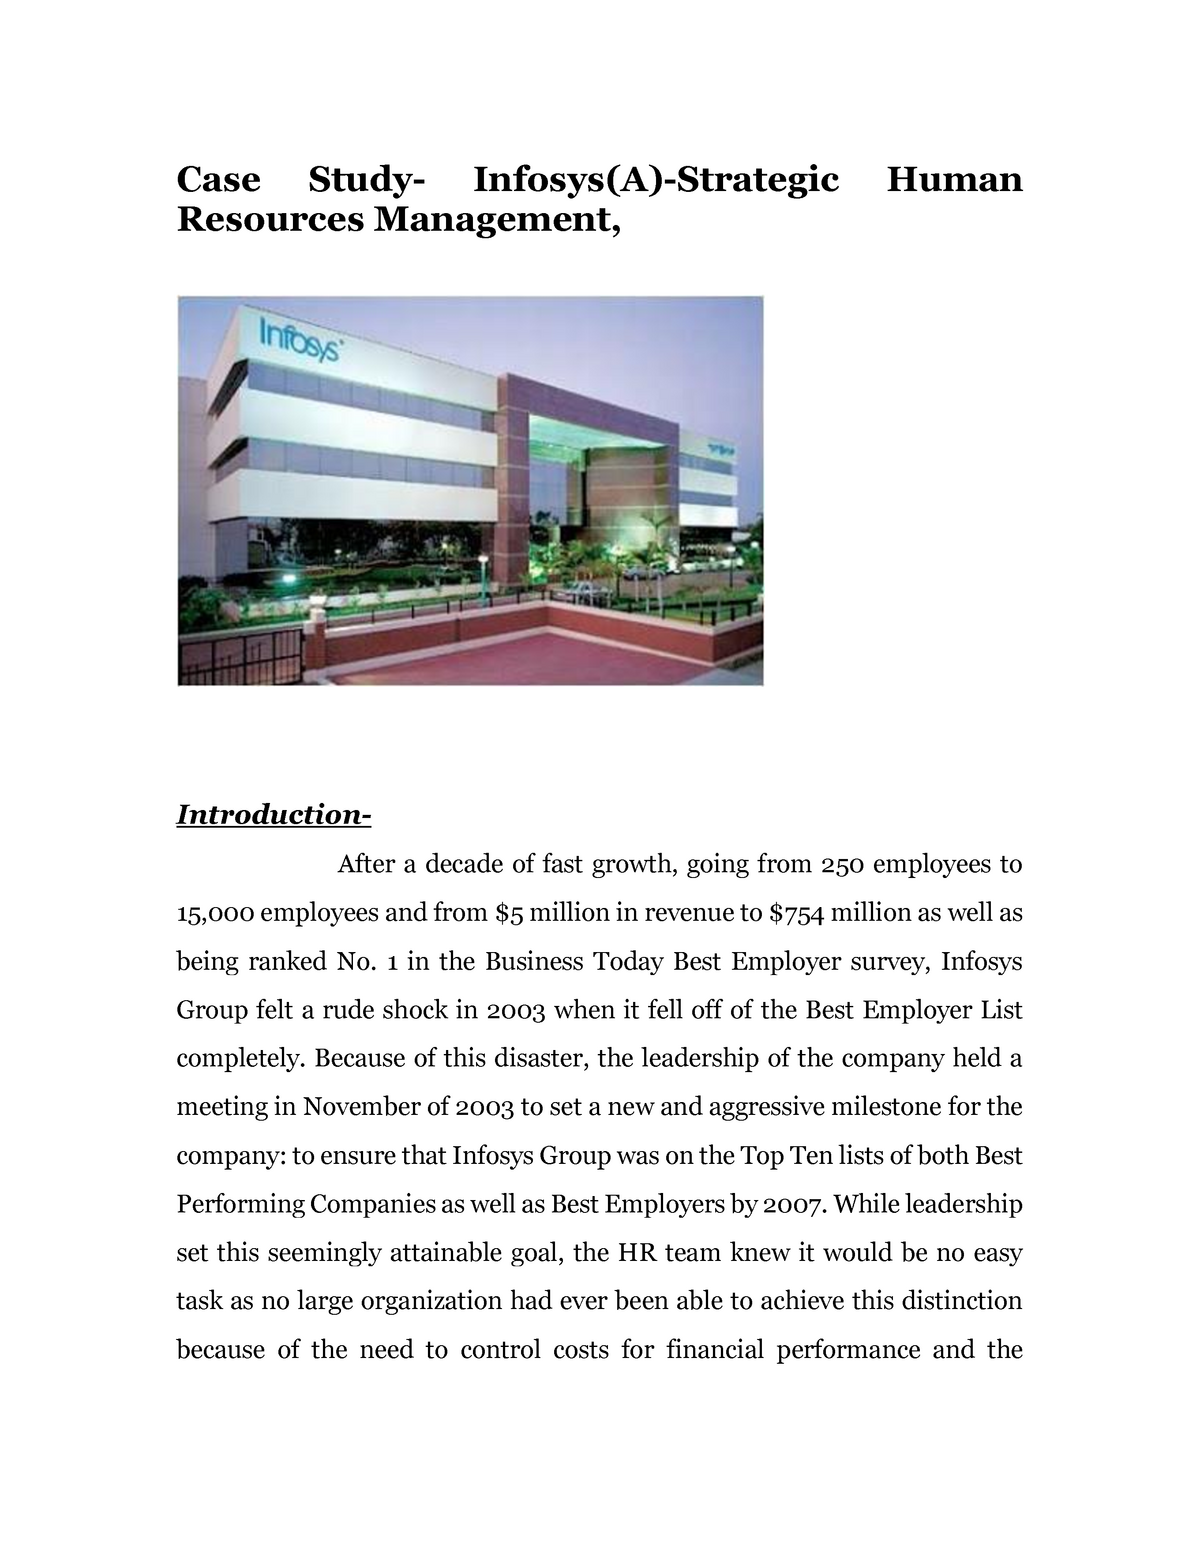 human resource management case study pdf